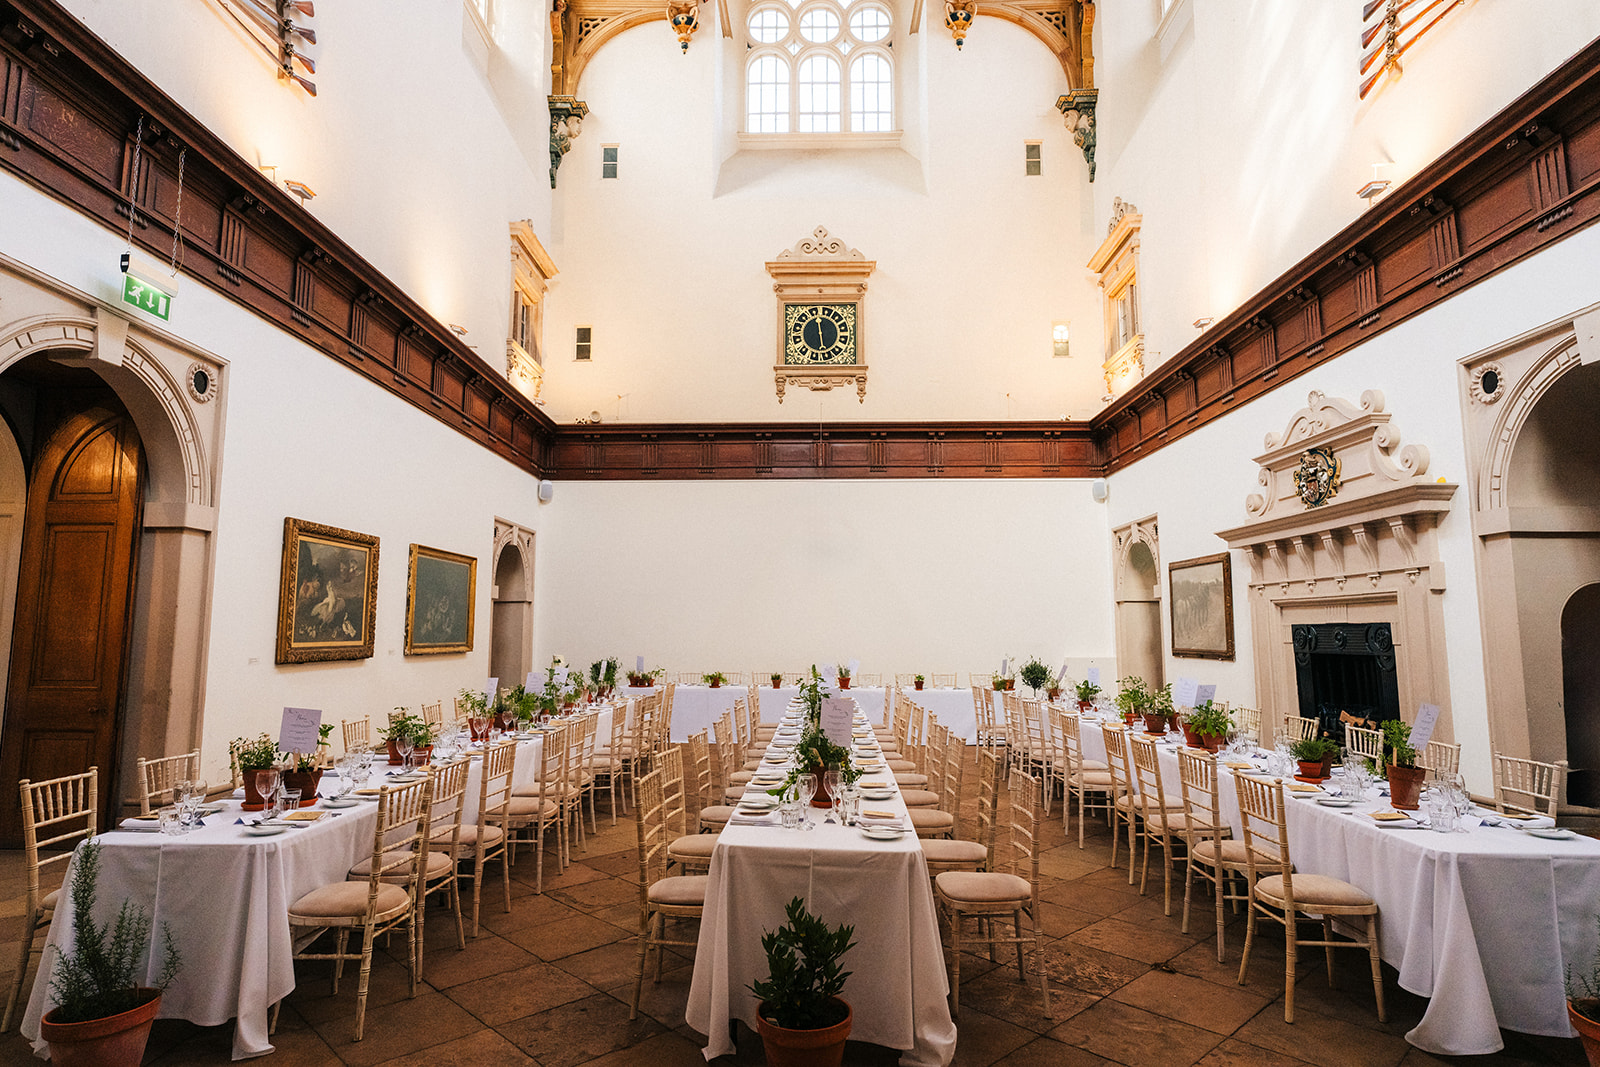 Wollaton Hall Wedding Photography - inside photo of the wedding breakfast room at wollaton hall